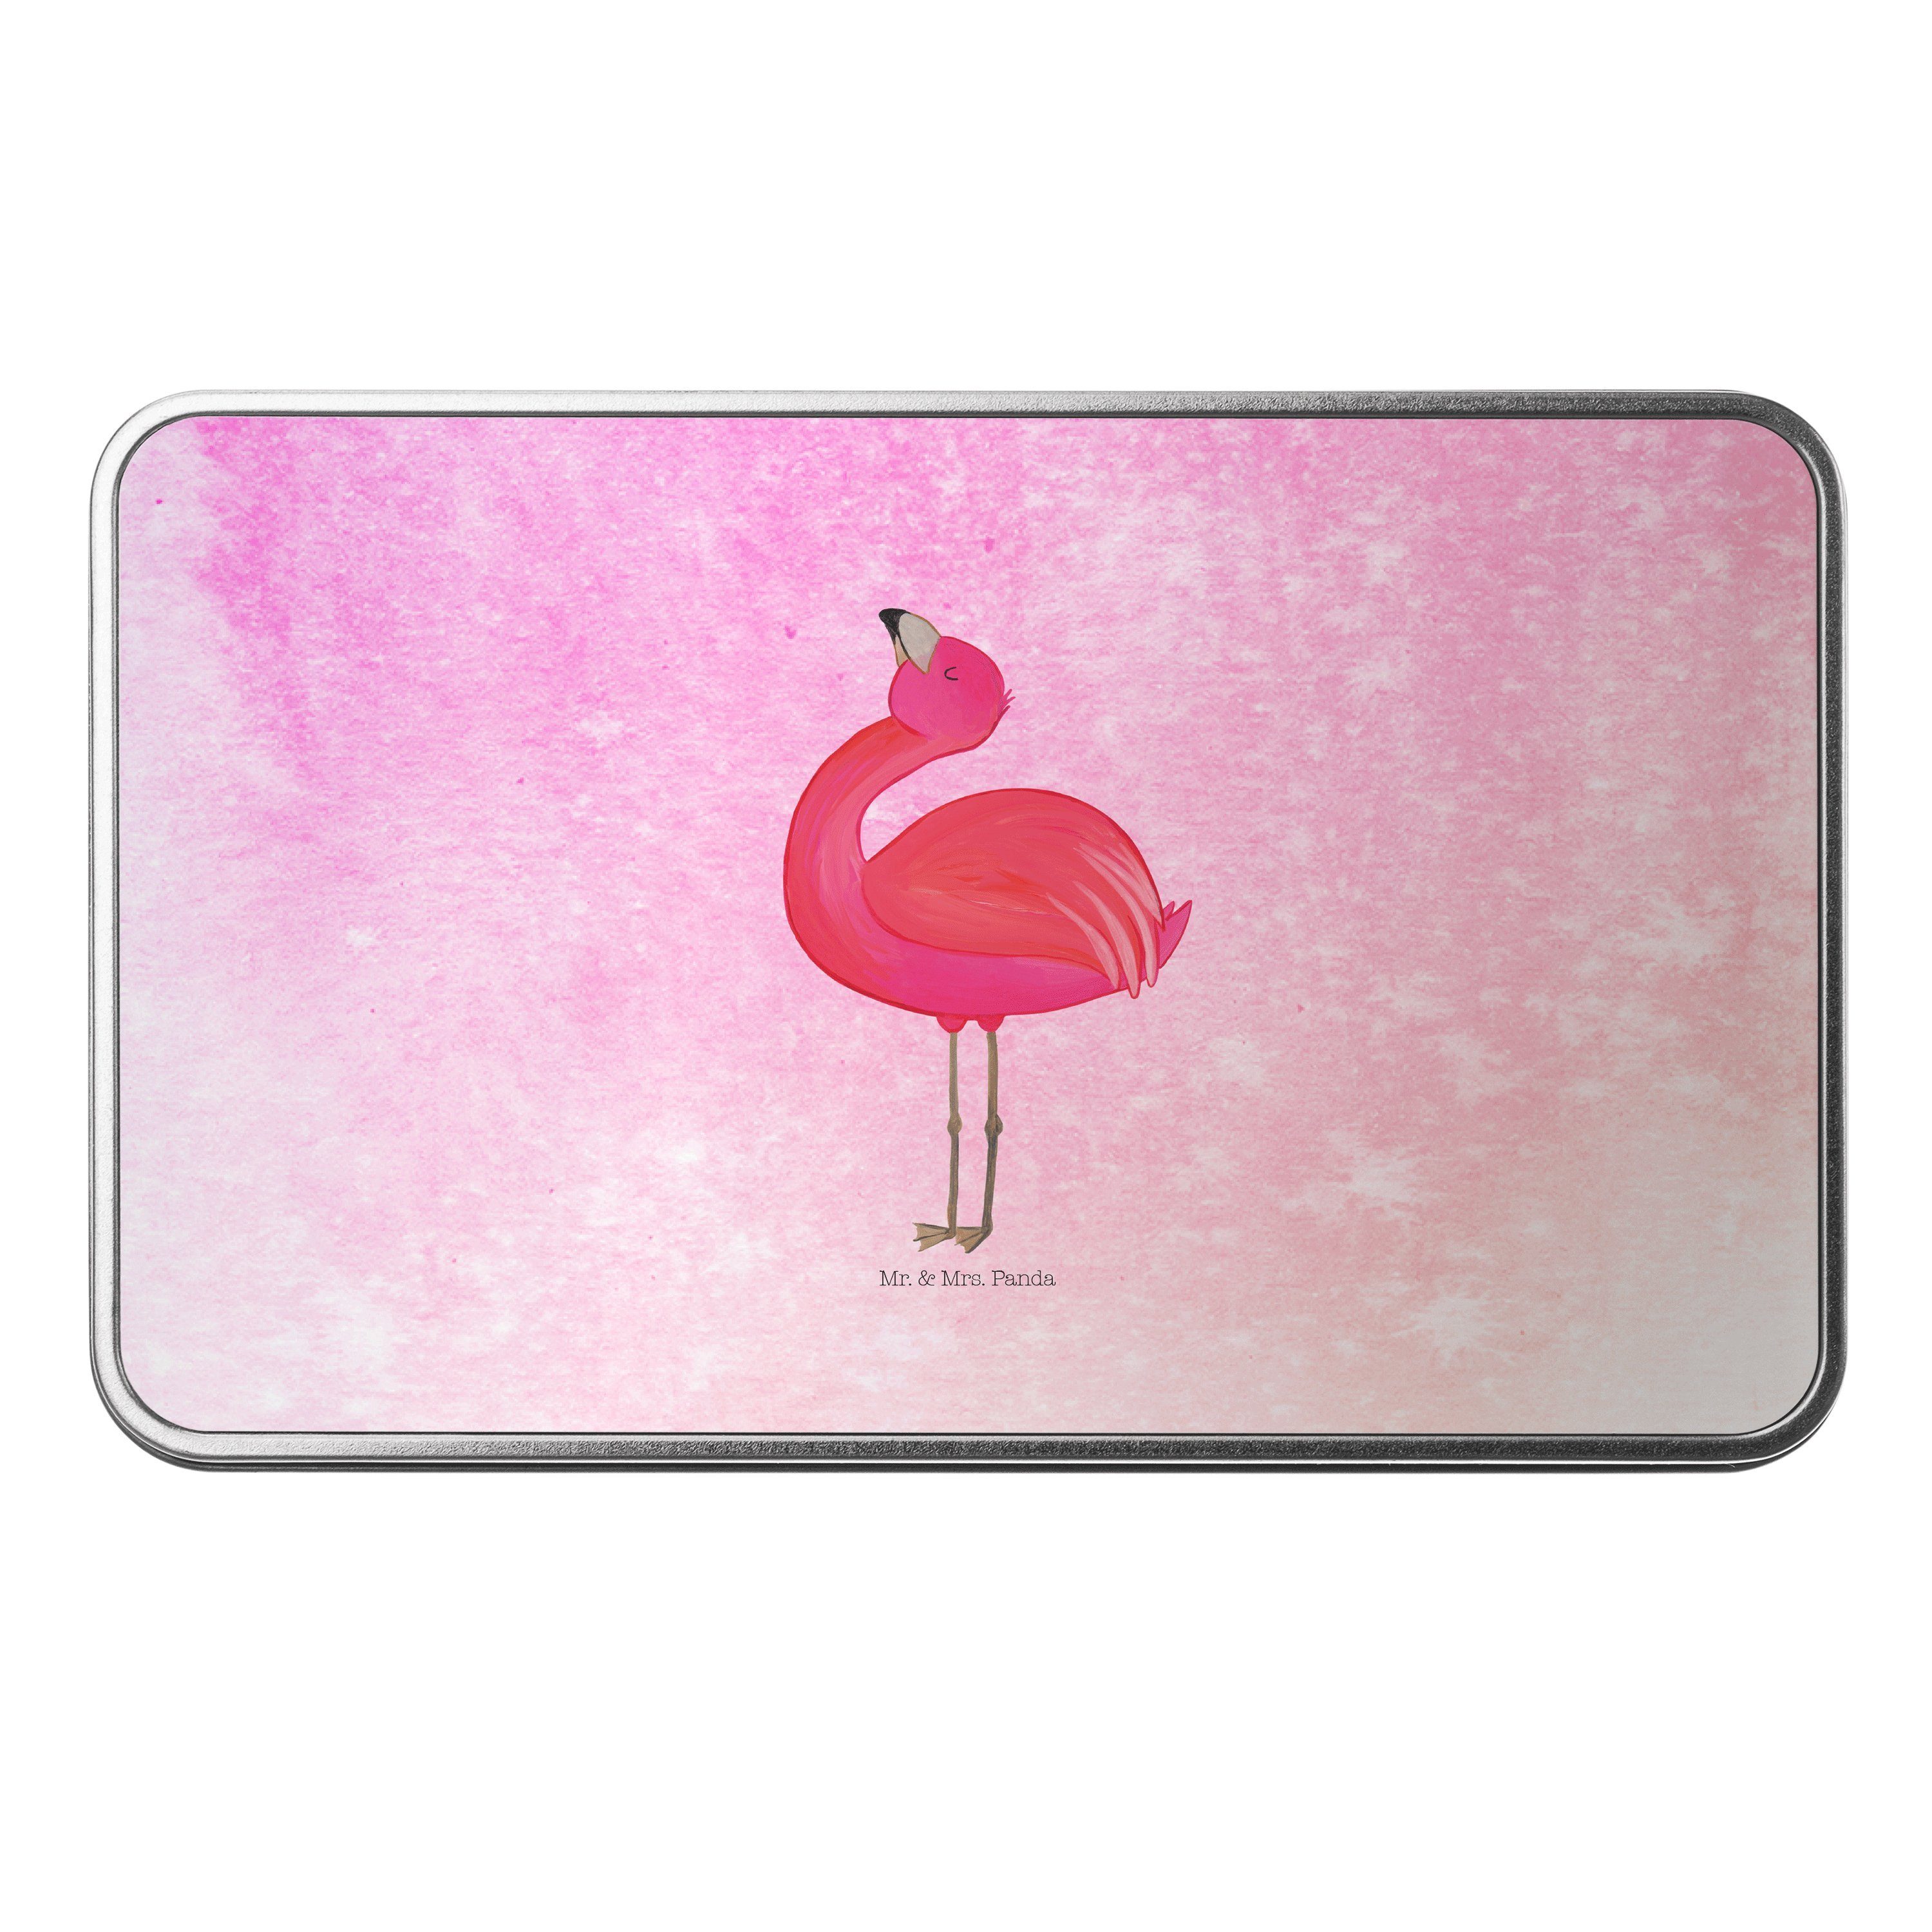 Mr. & Mrs. Panda Dose Flamingo stolz - Aquarell Pink - Geschenk, Metalldose, Blechbox, Mama (1 St)